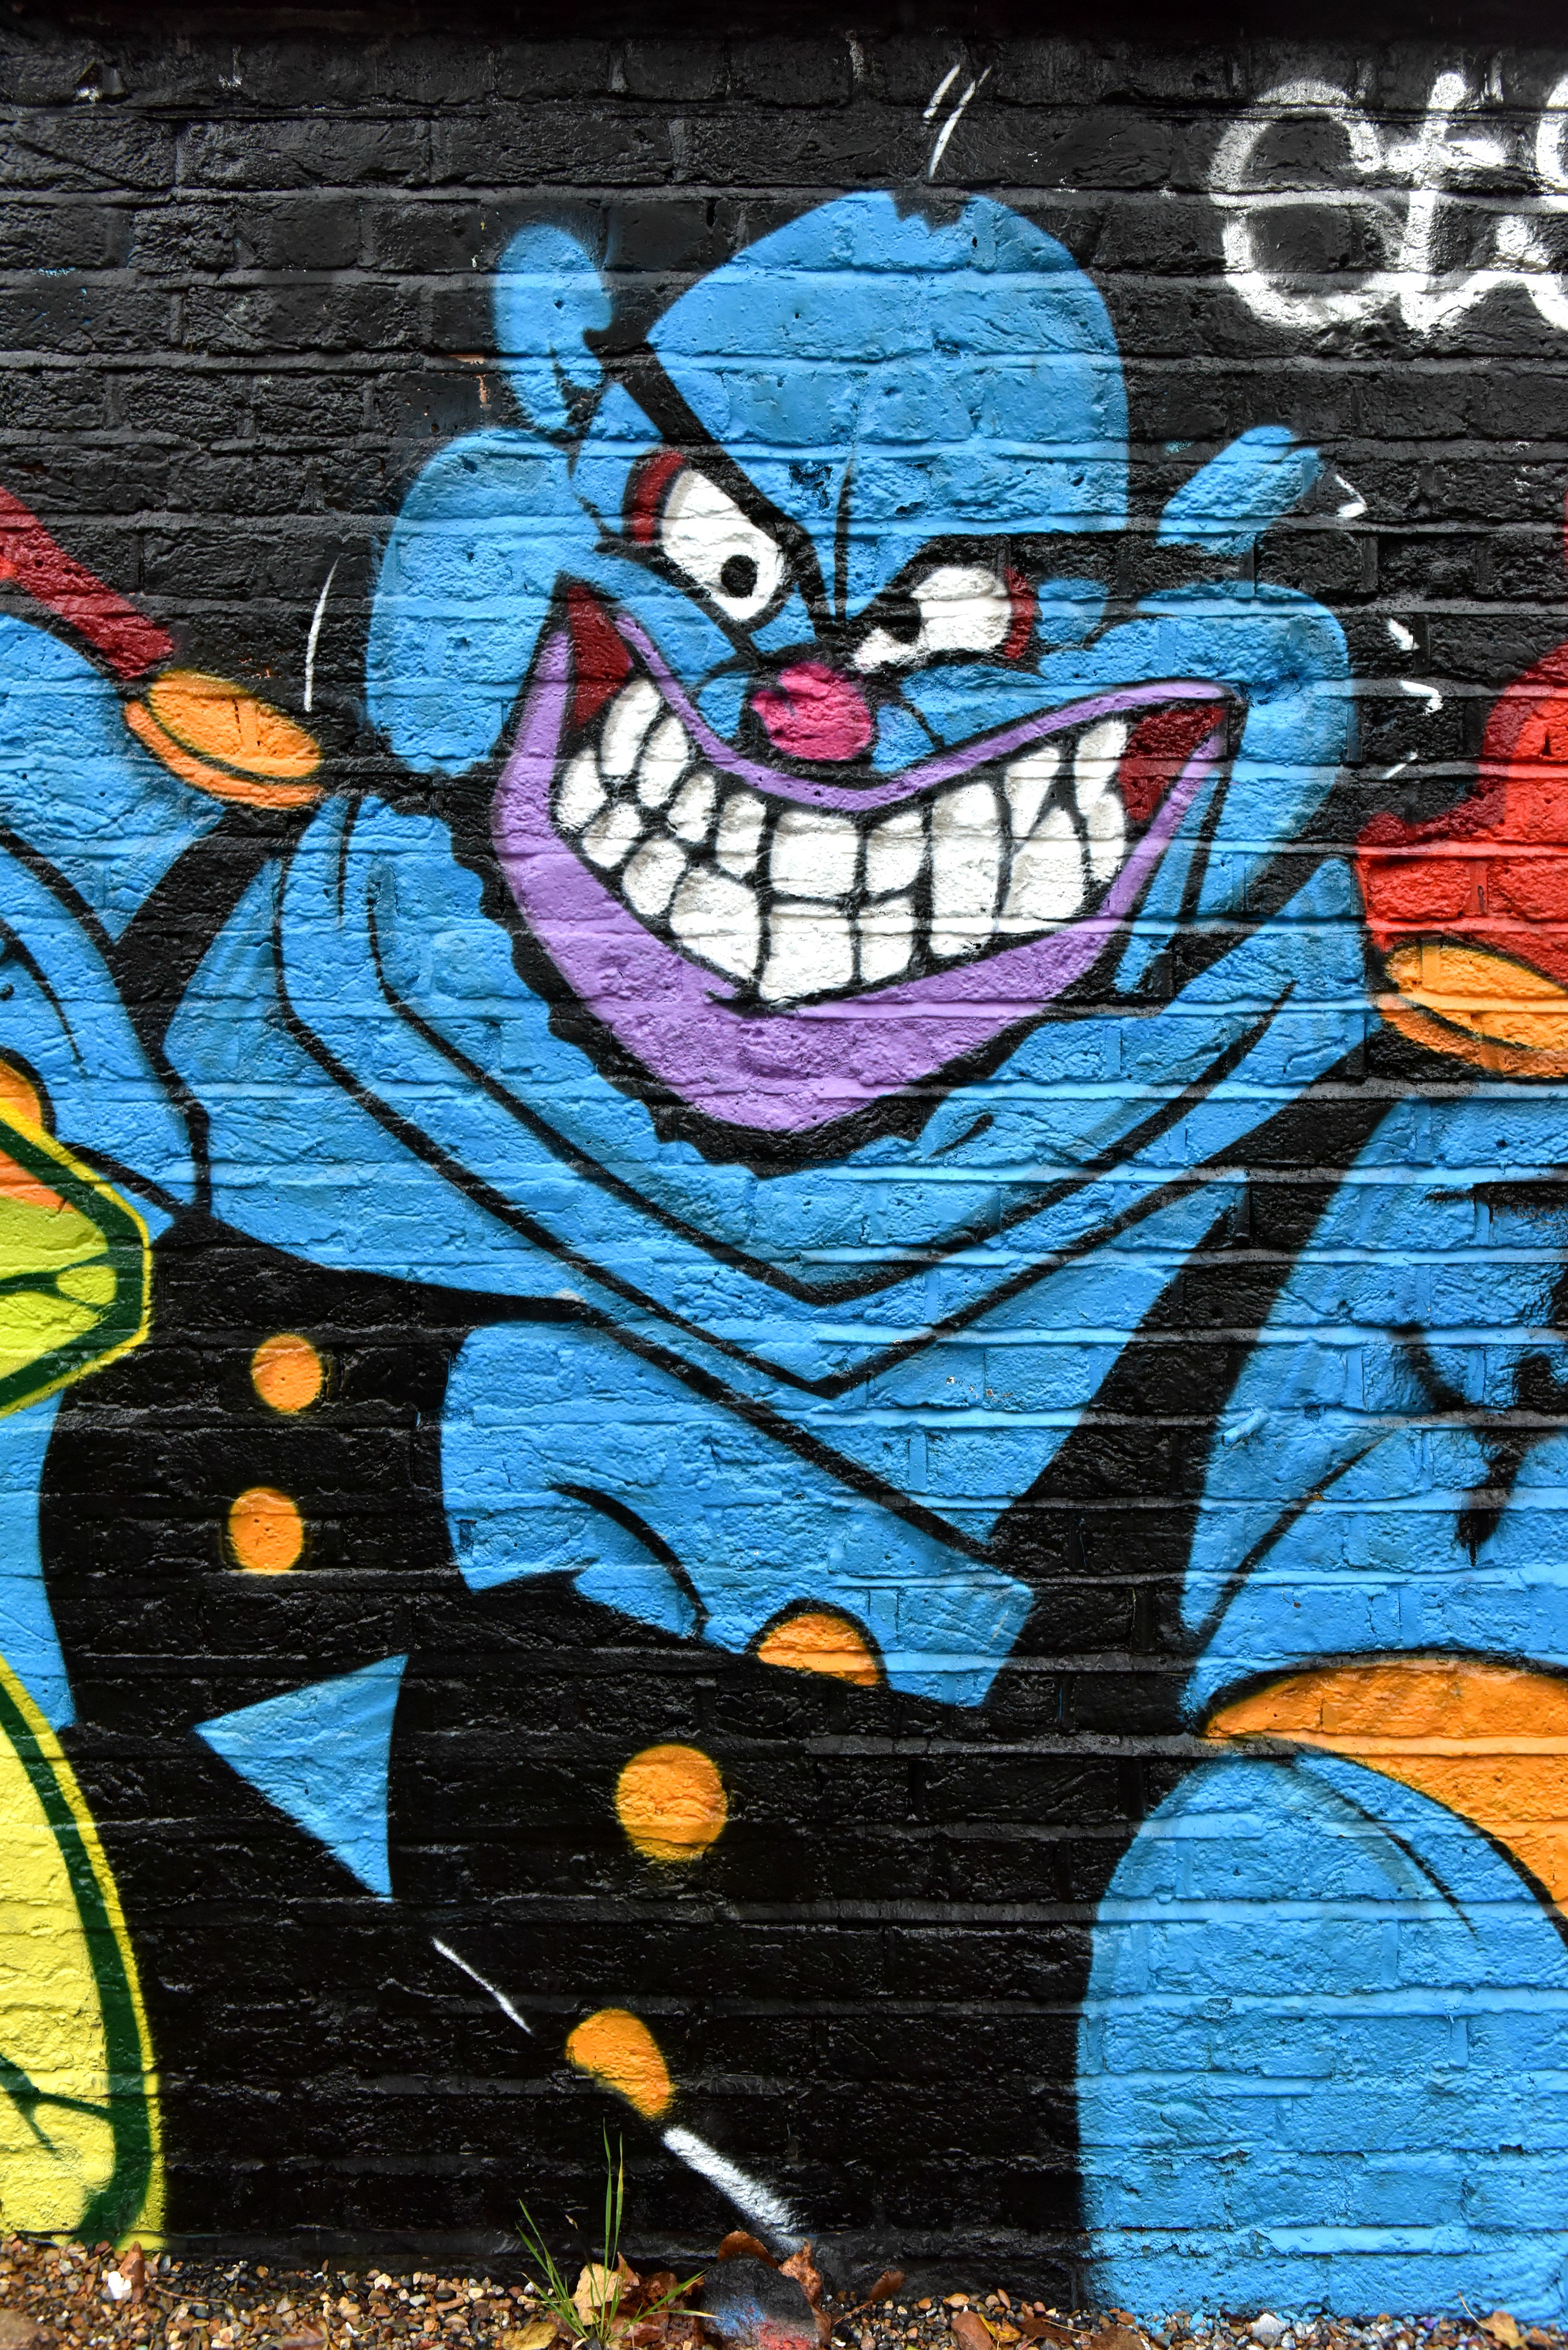 <img src="ana.jpg" alt="ana blue genie mural street art"> 